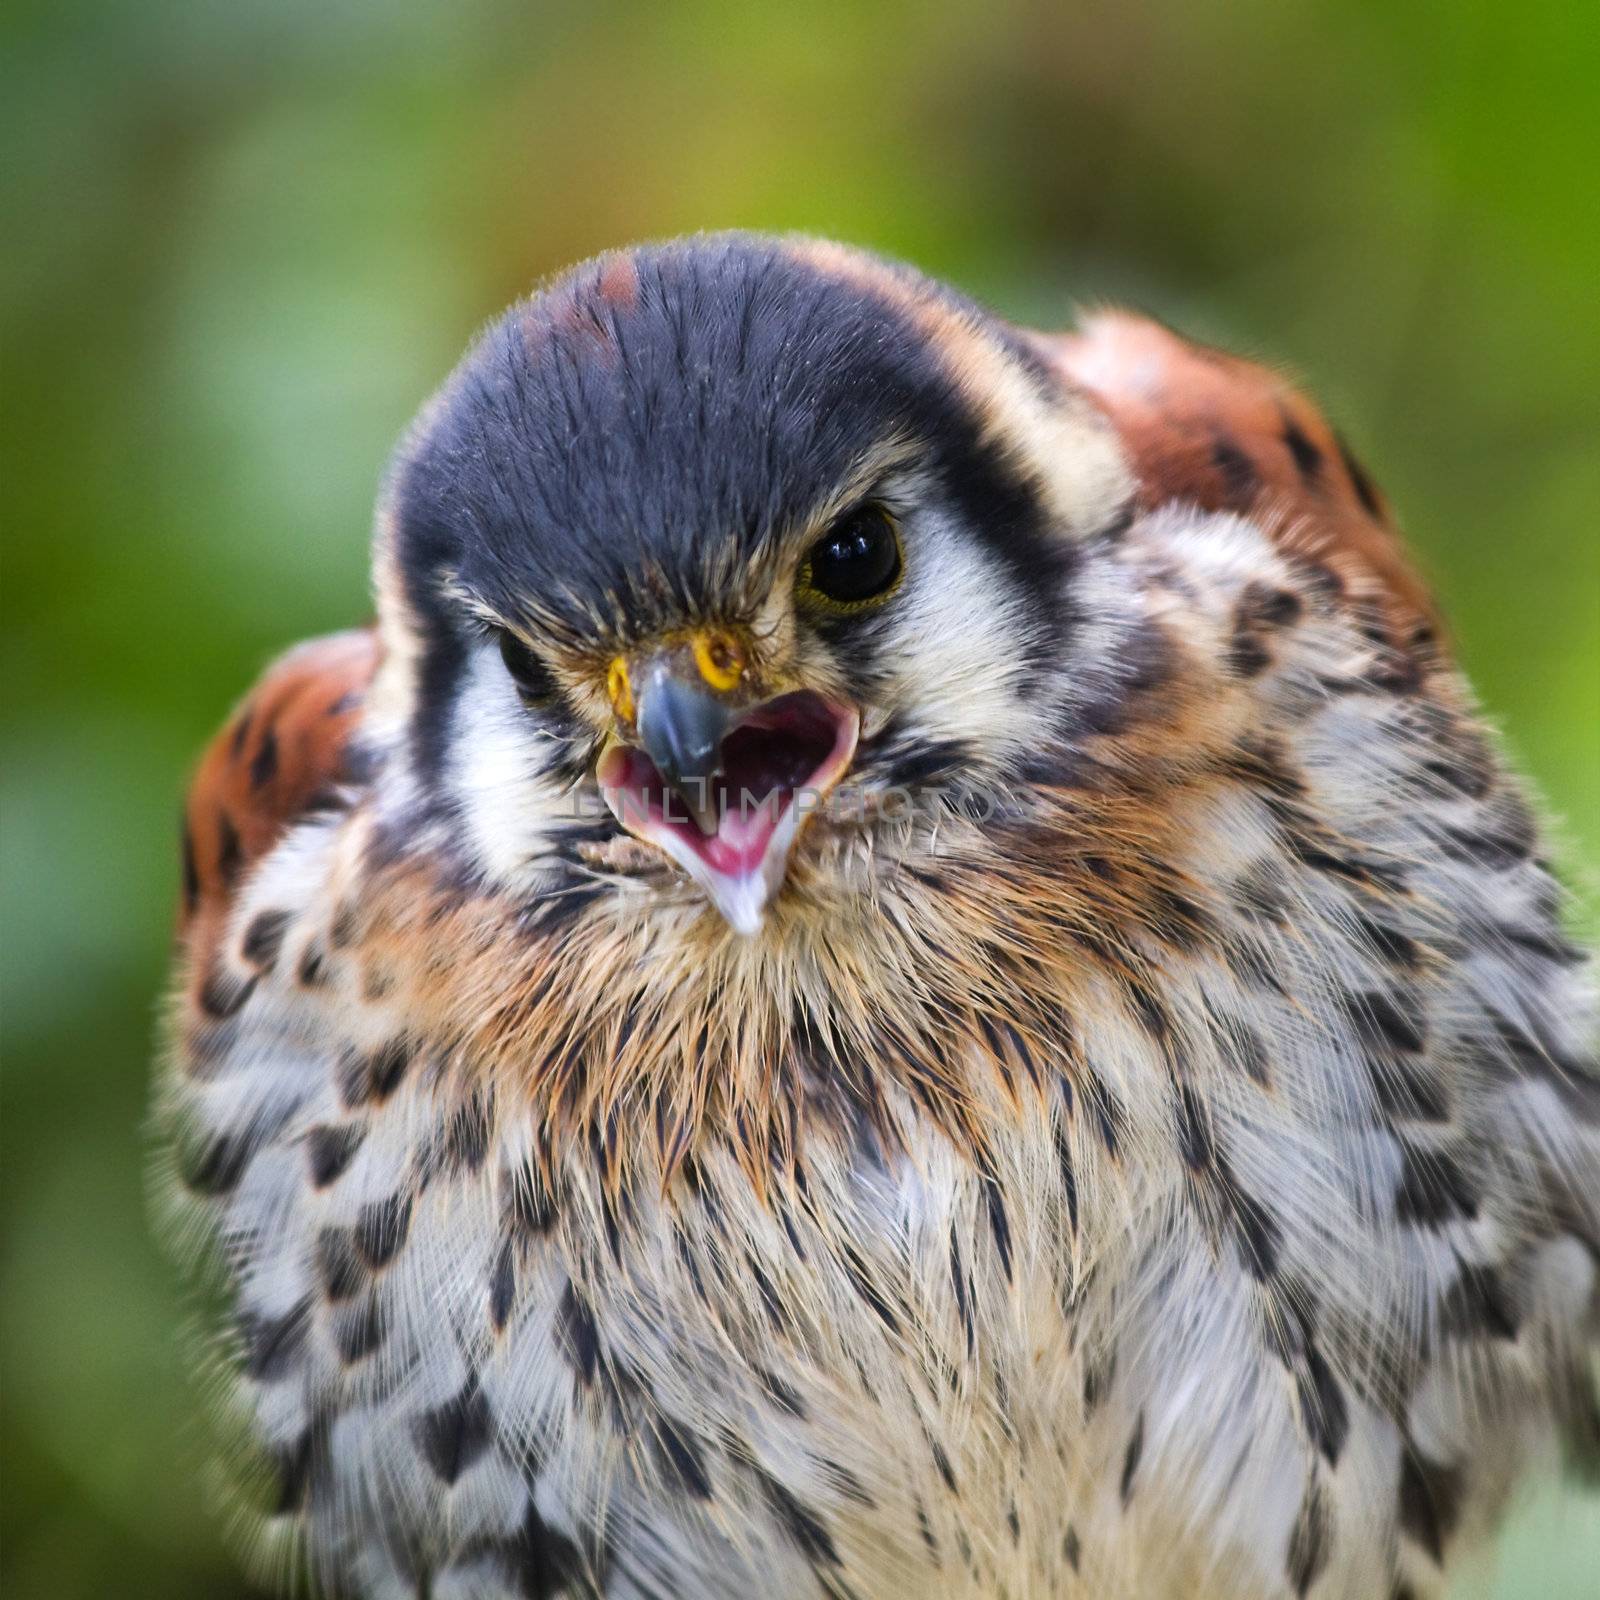 American kestrel or Sparrow hawk by Colette